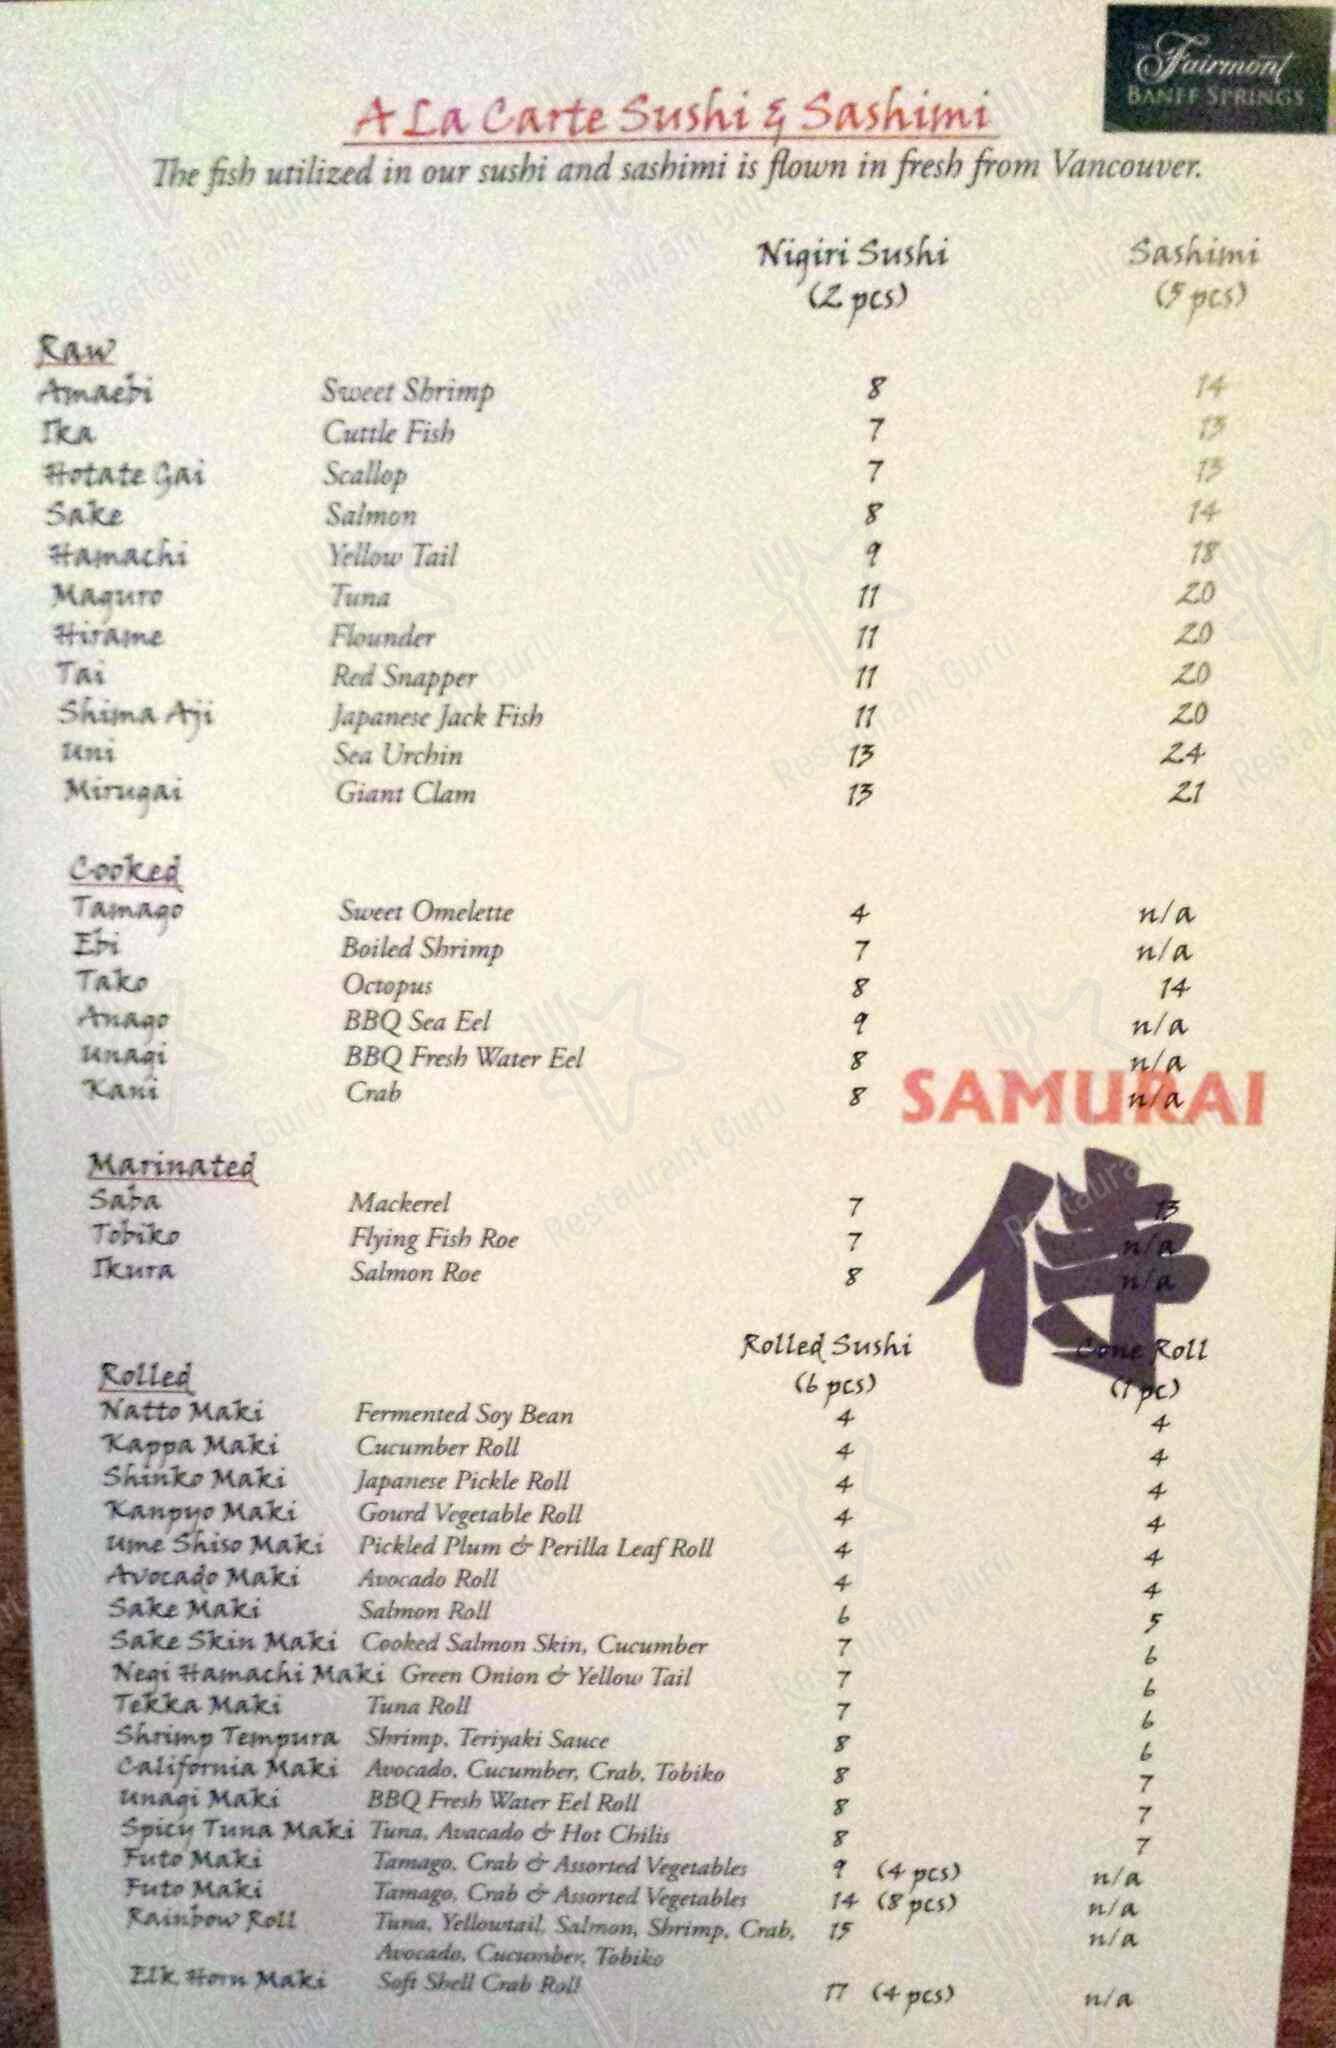 Samurai Sushi Bar and Restaurant menu